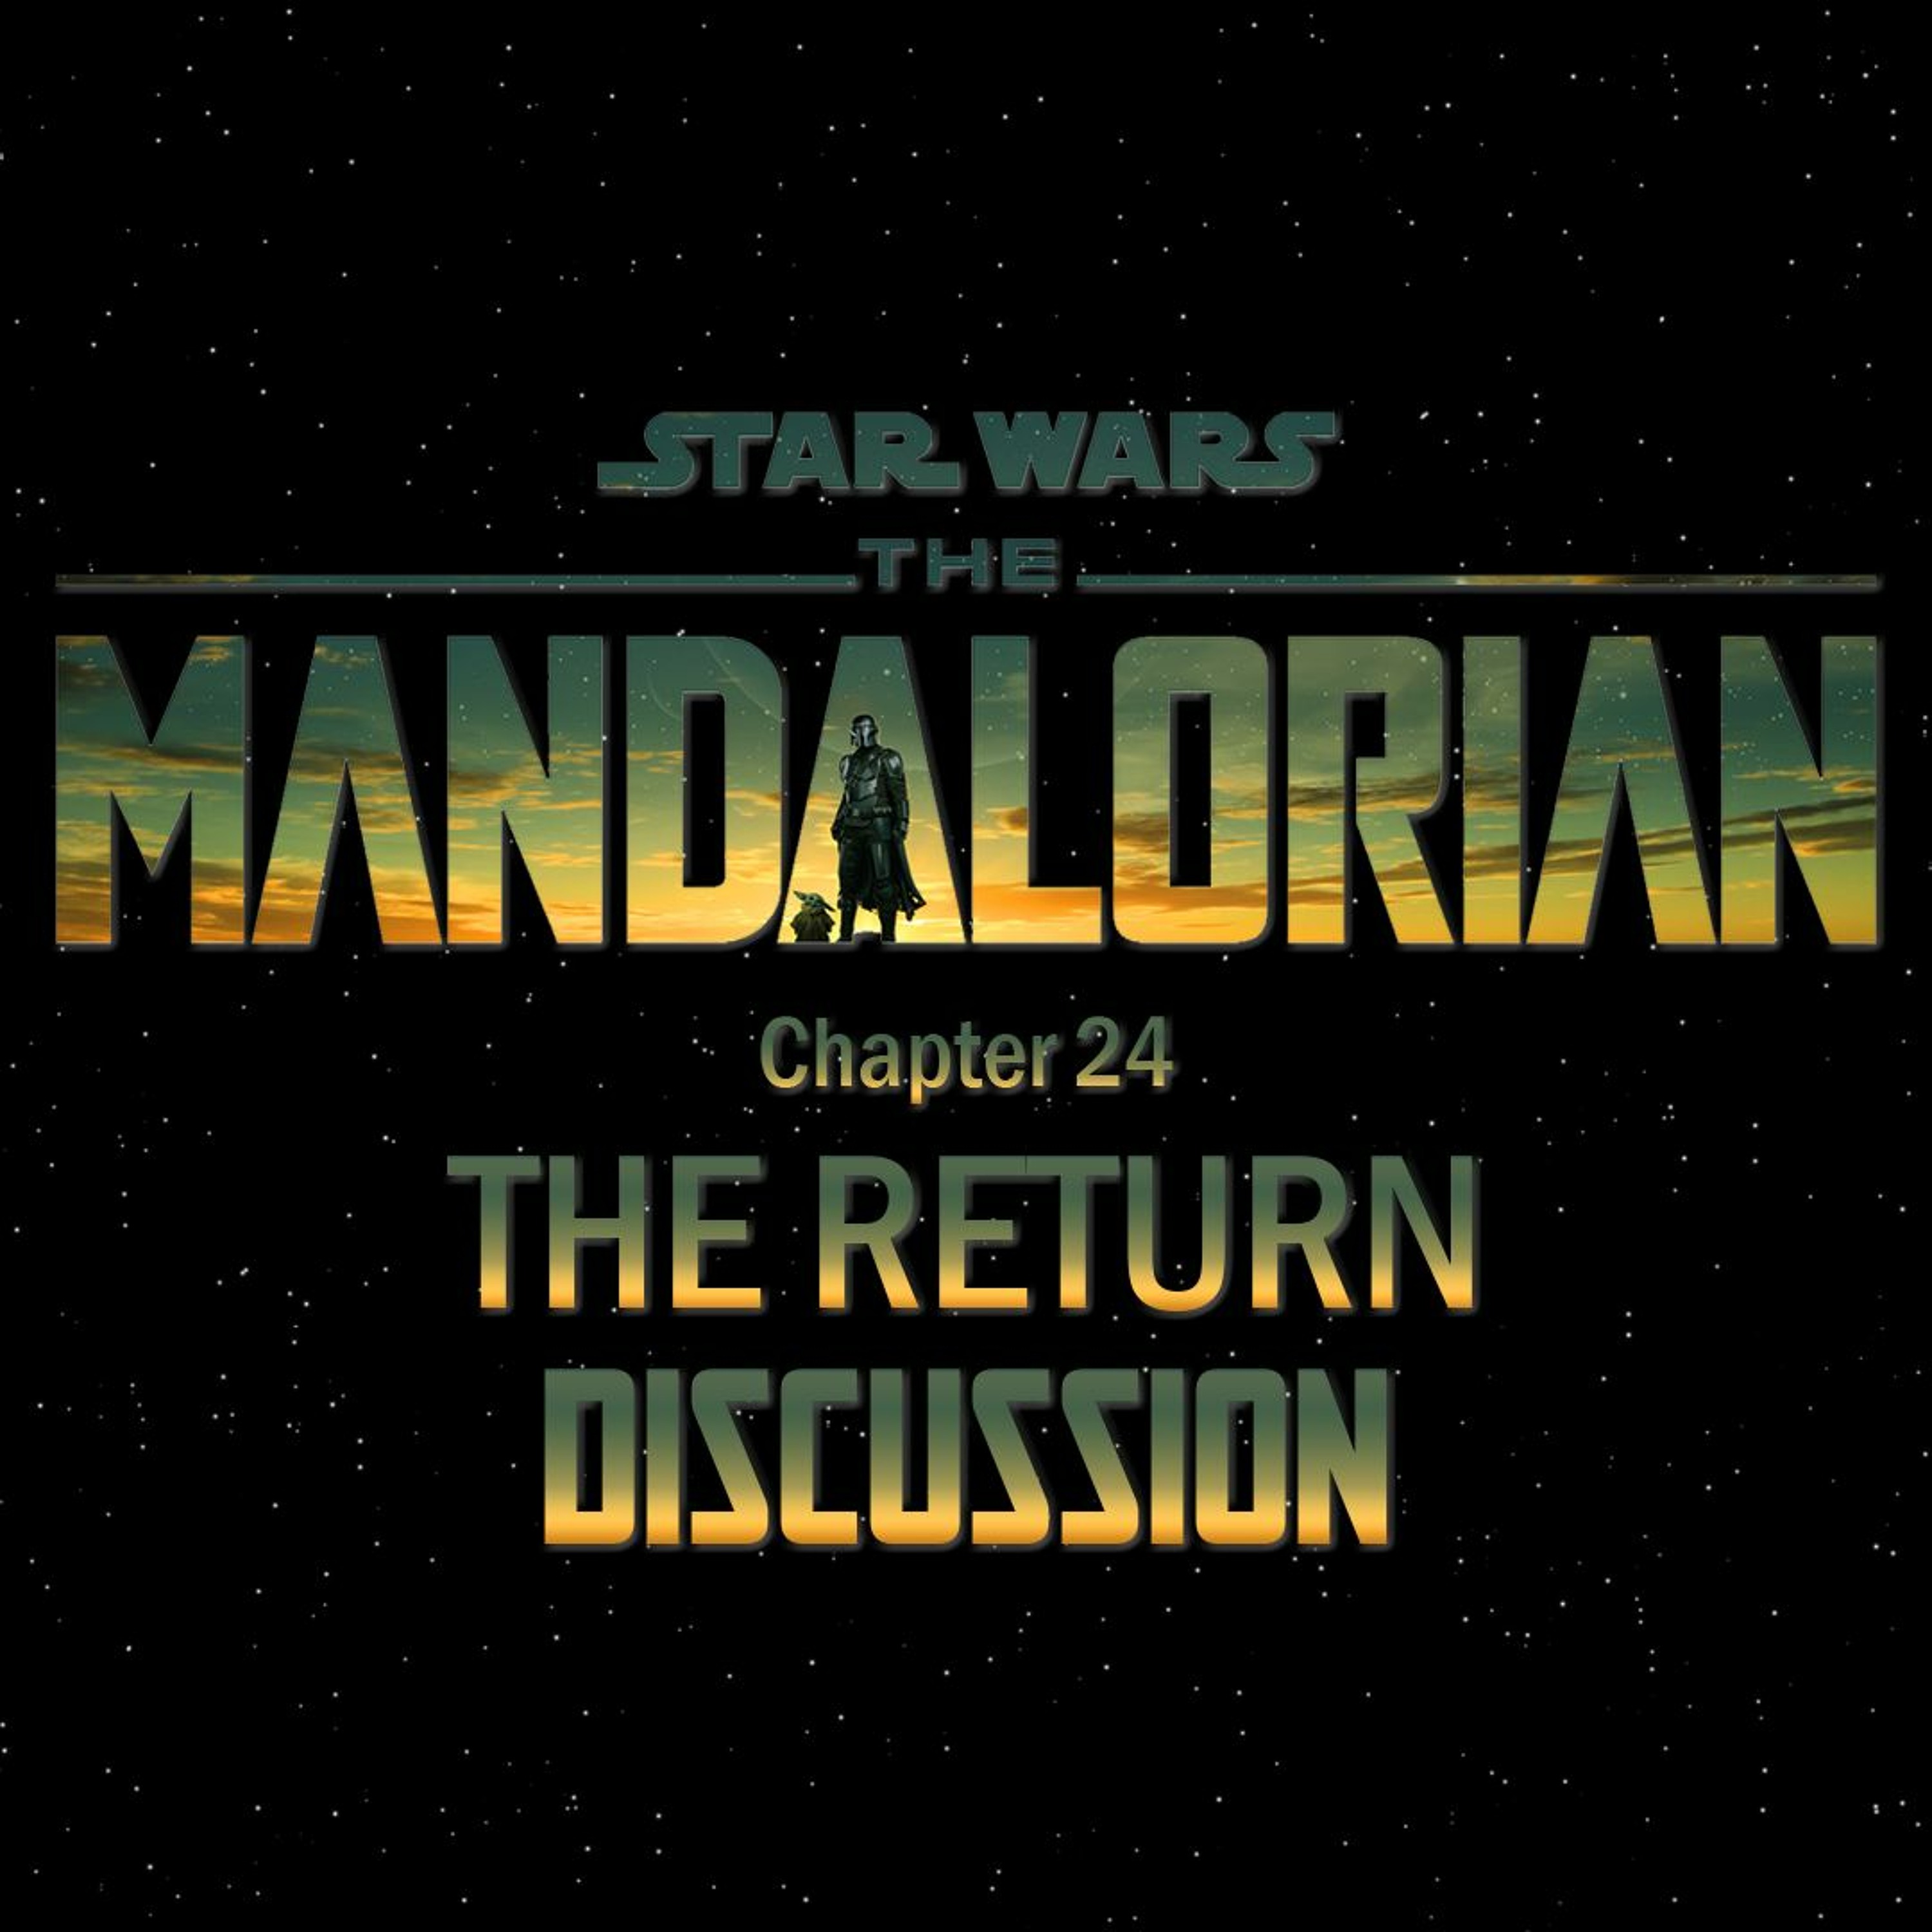 The Mandalorian Chapter 24: The Return